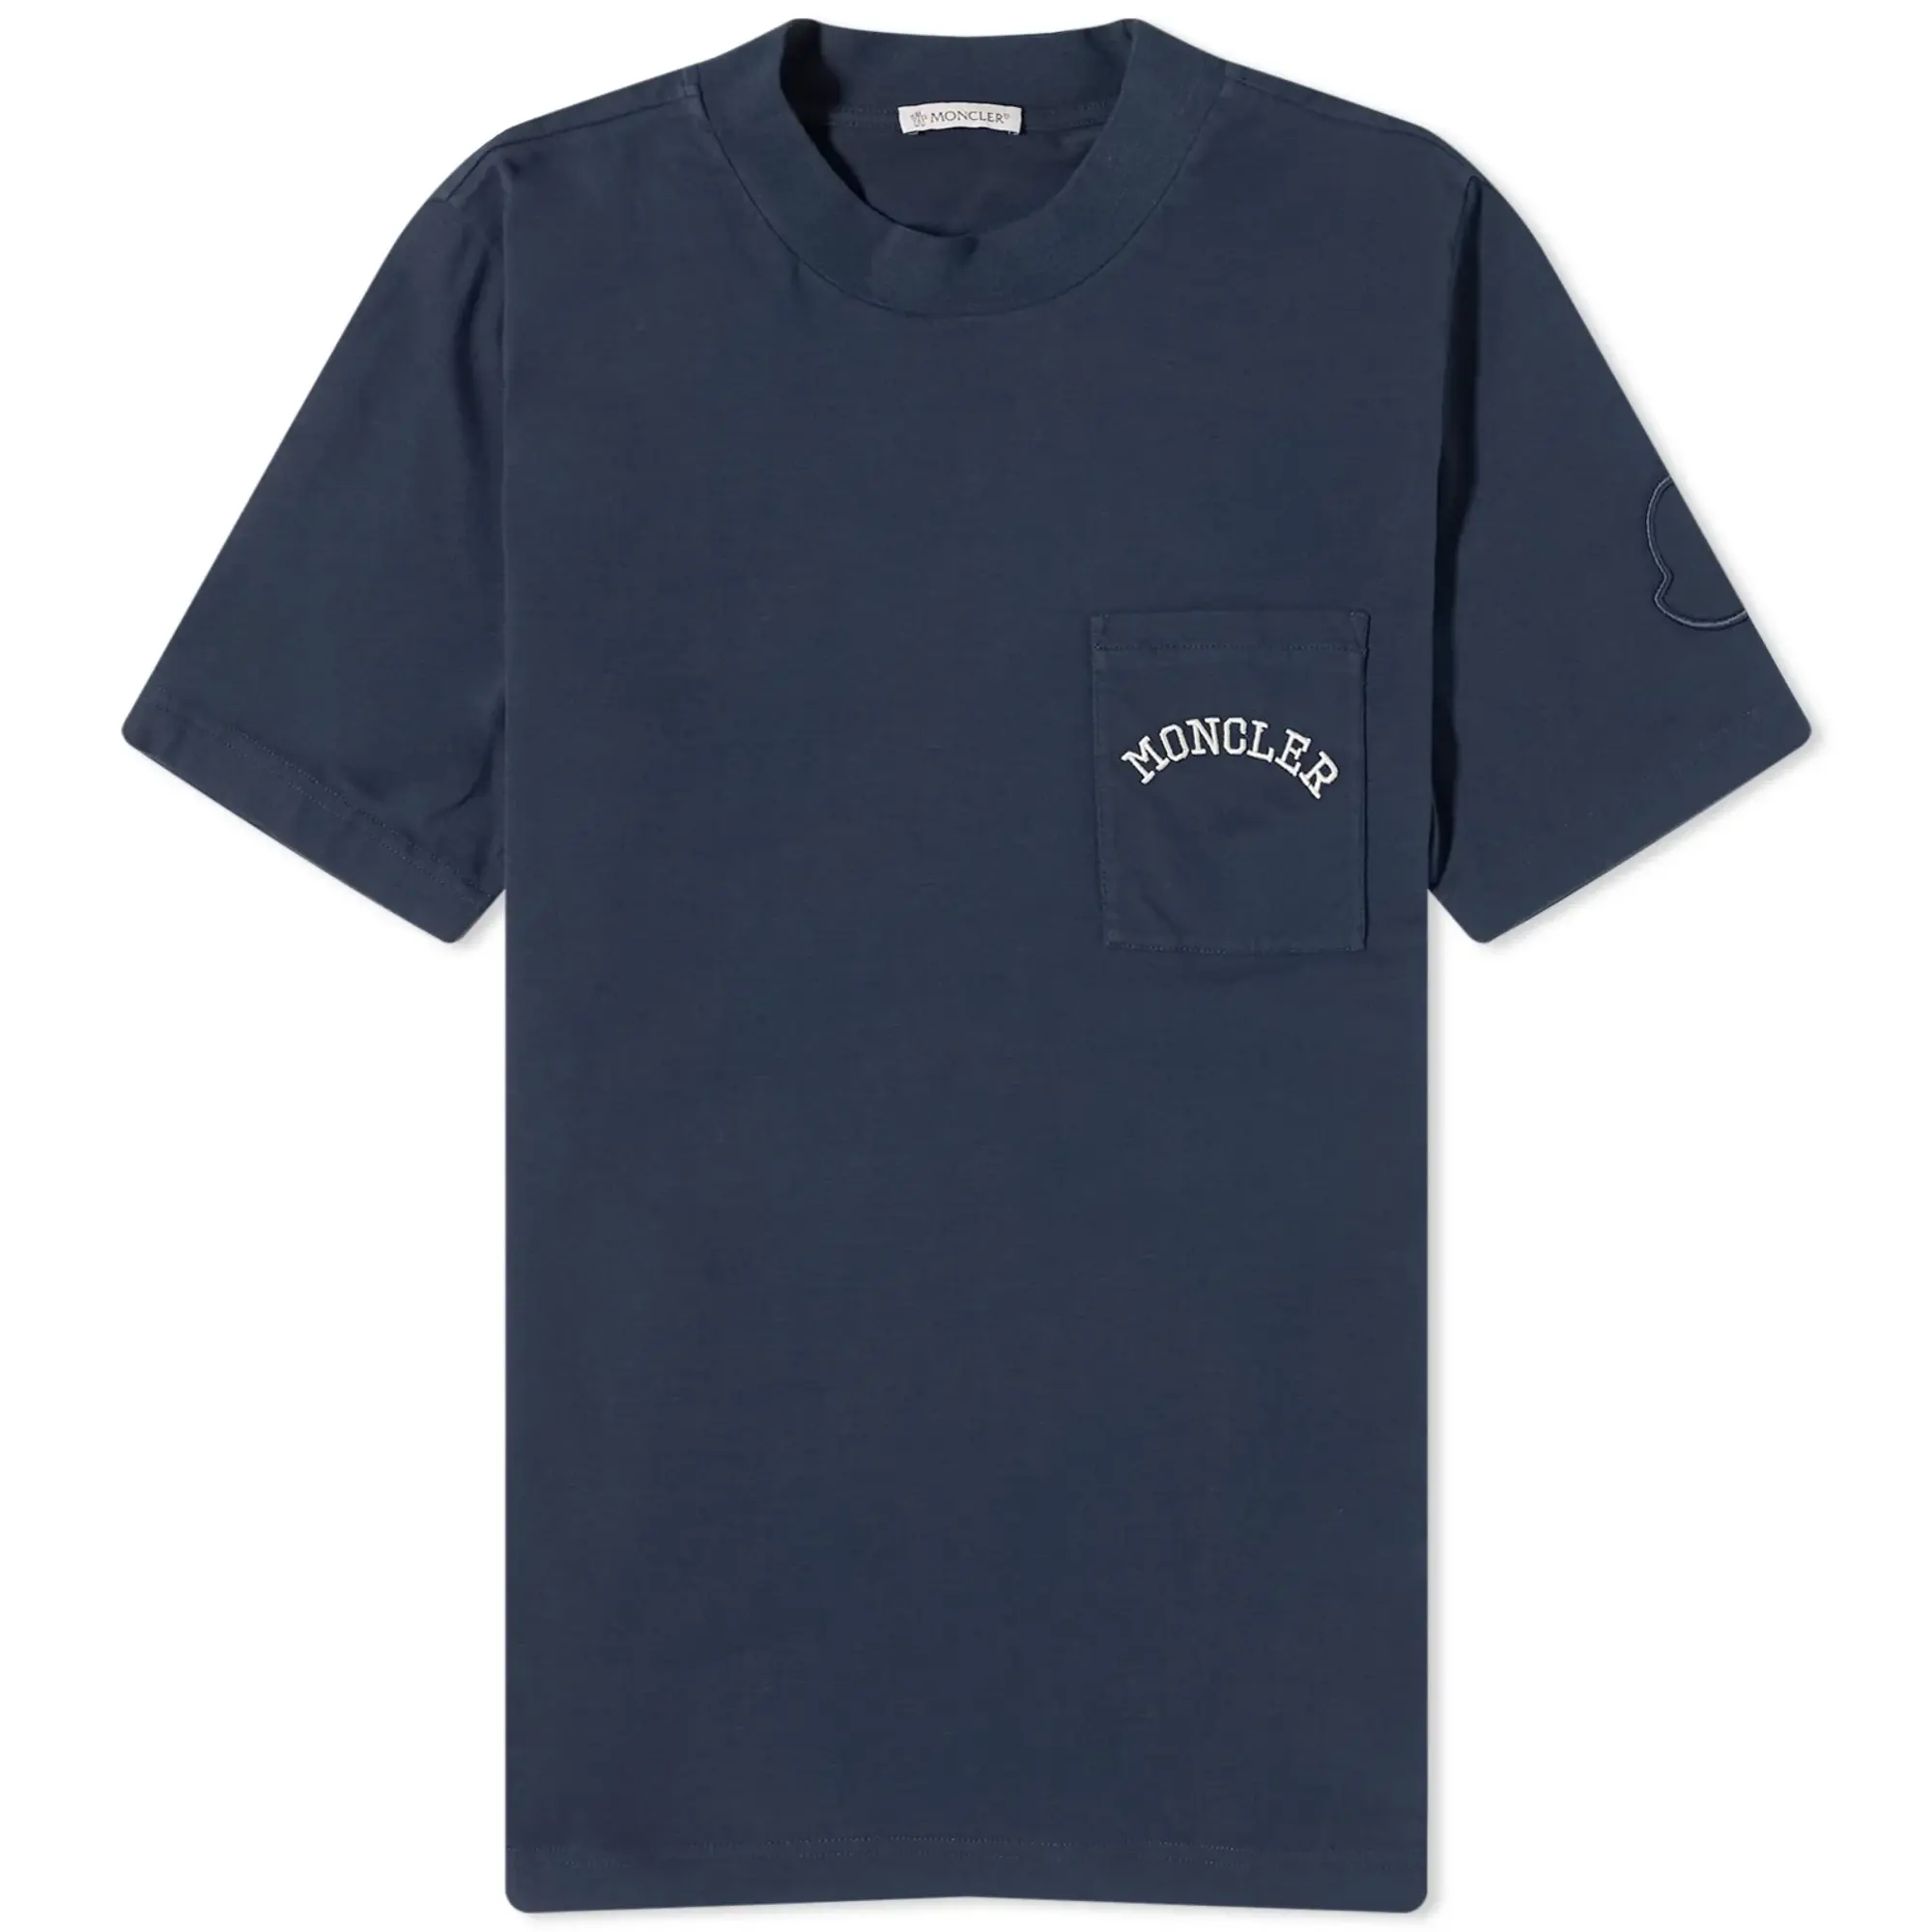 Moncler Men's Pocket T-Shirt Navy